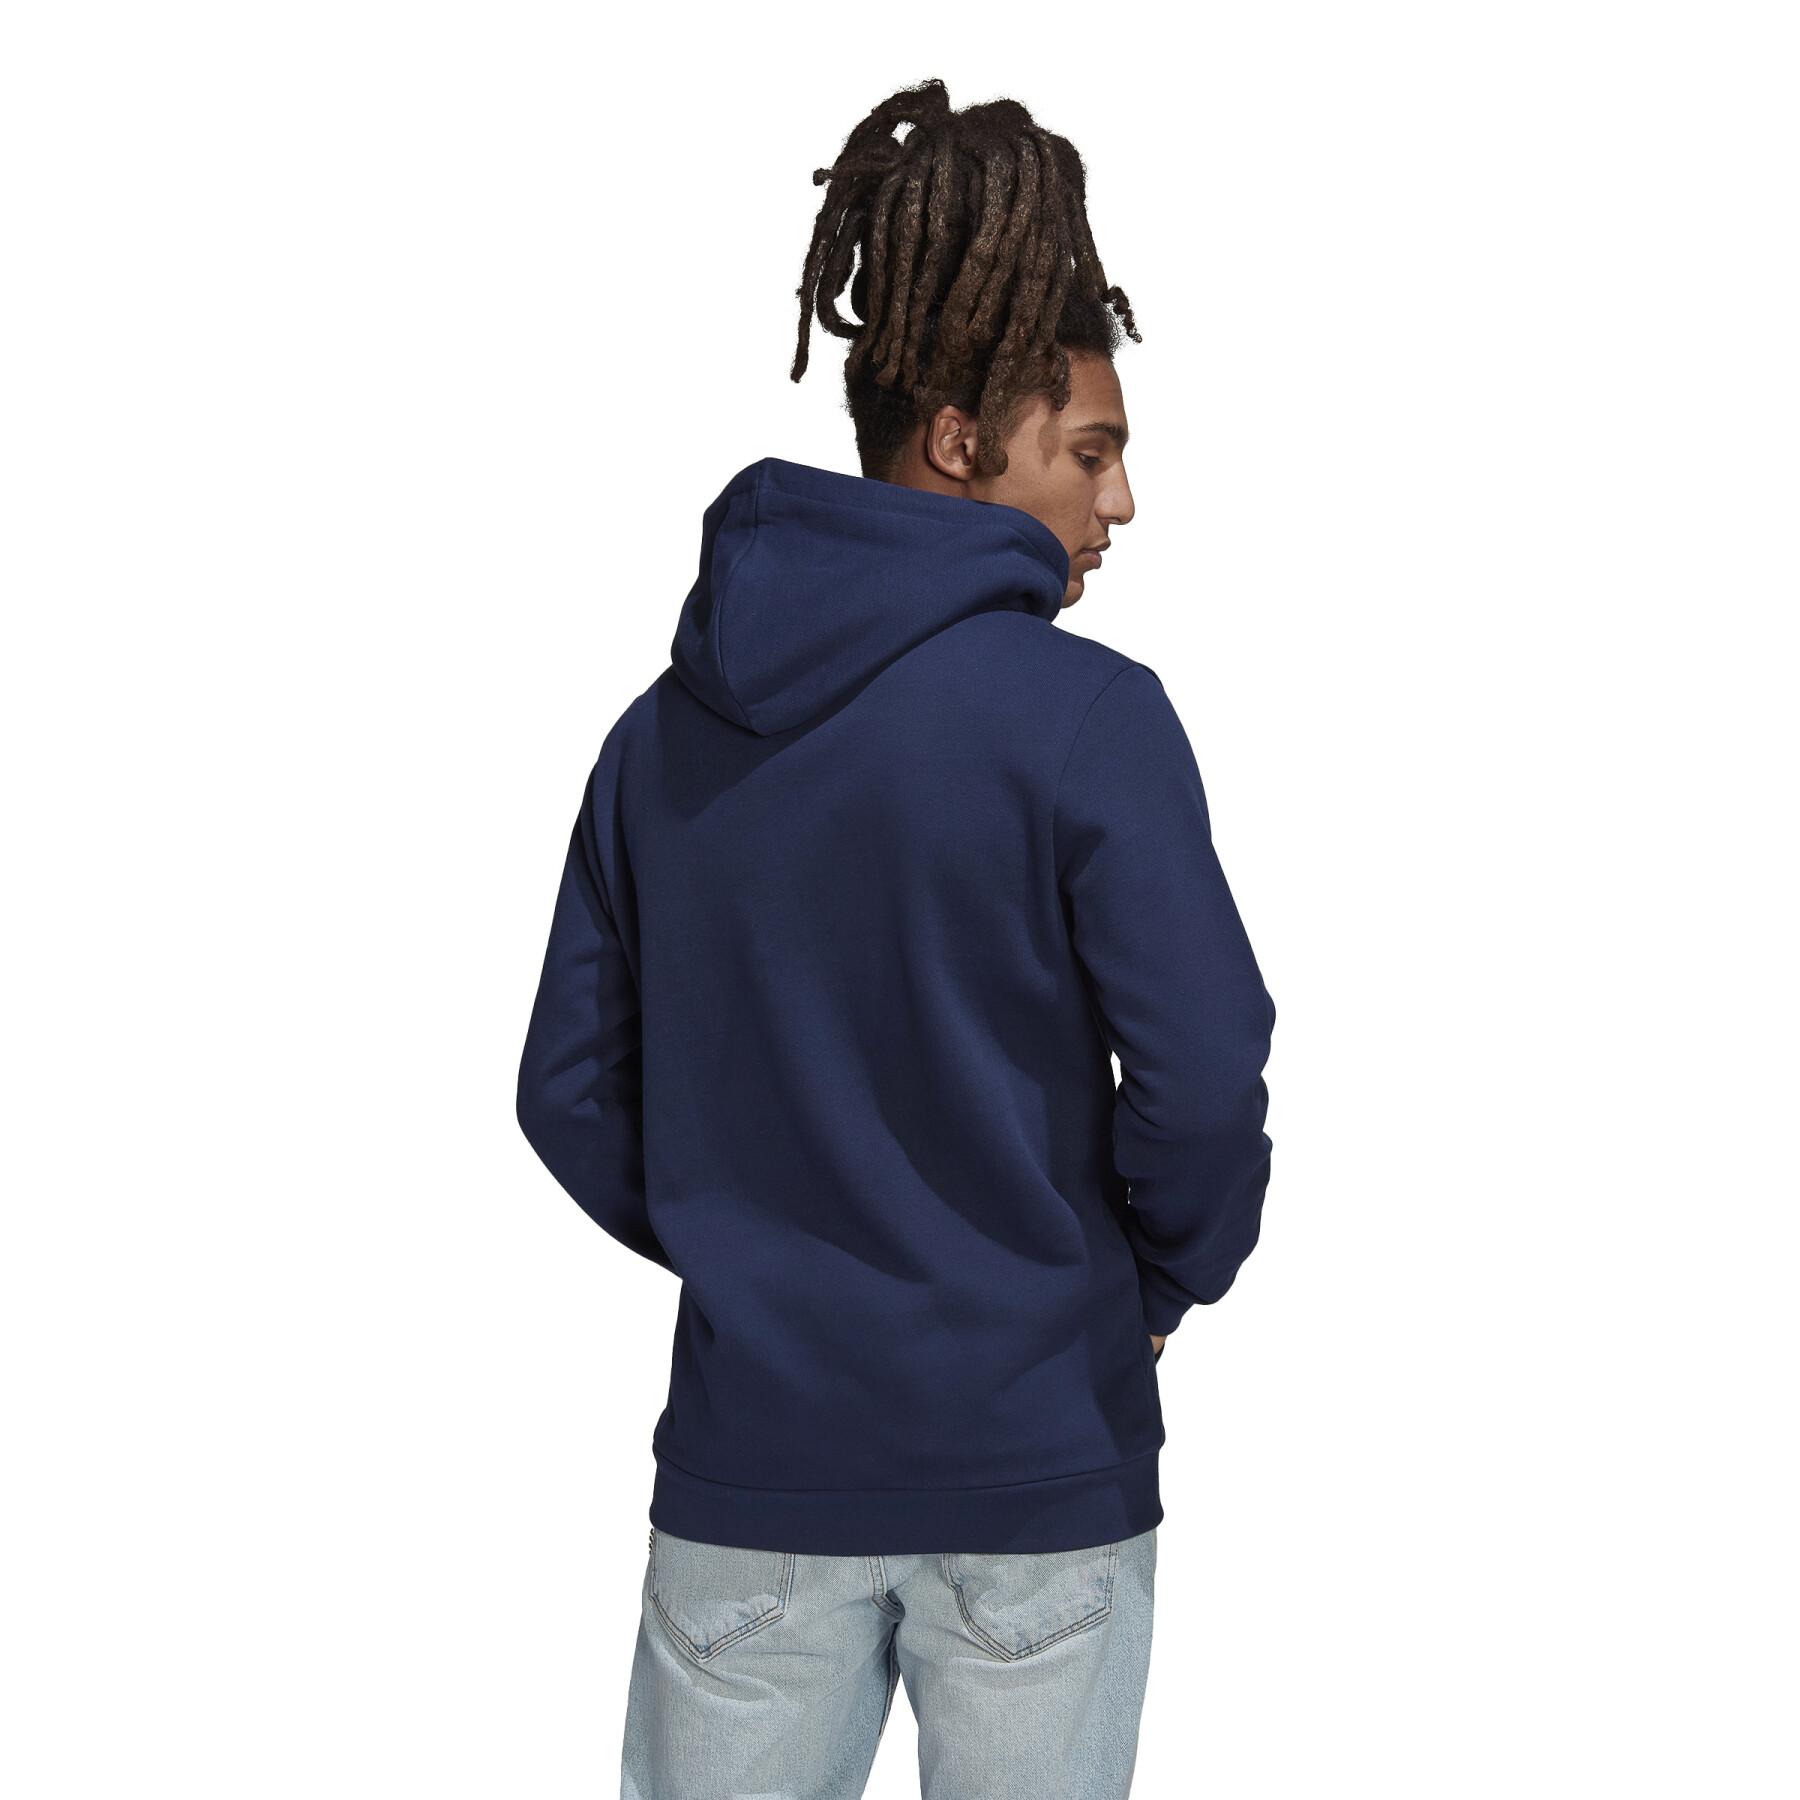 Sweatshirt à capuche adidas Originals Trefoil Adicolor Classics